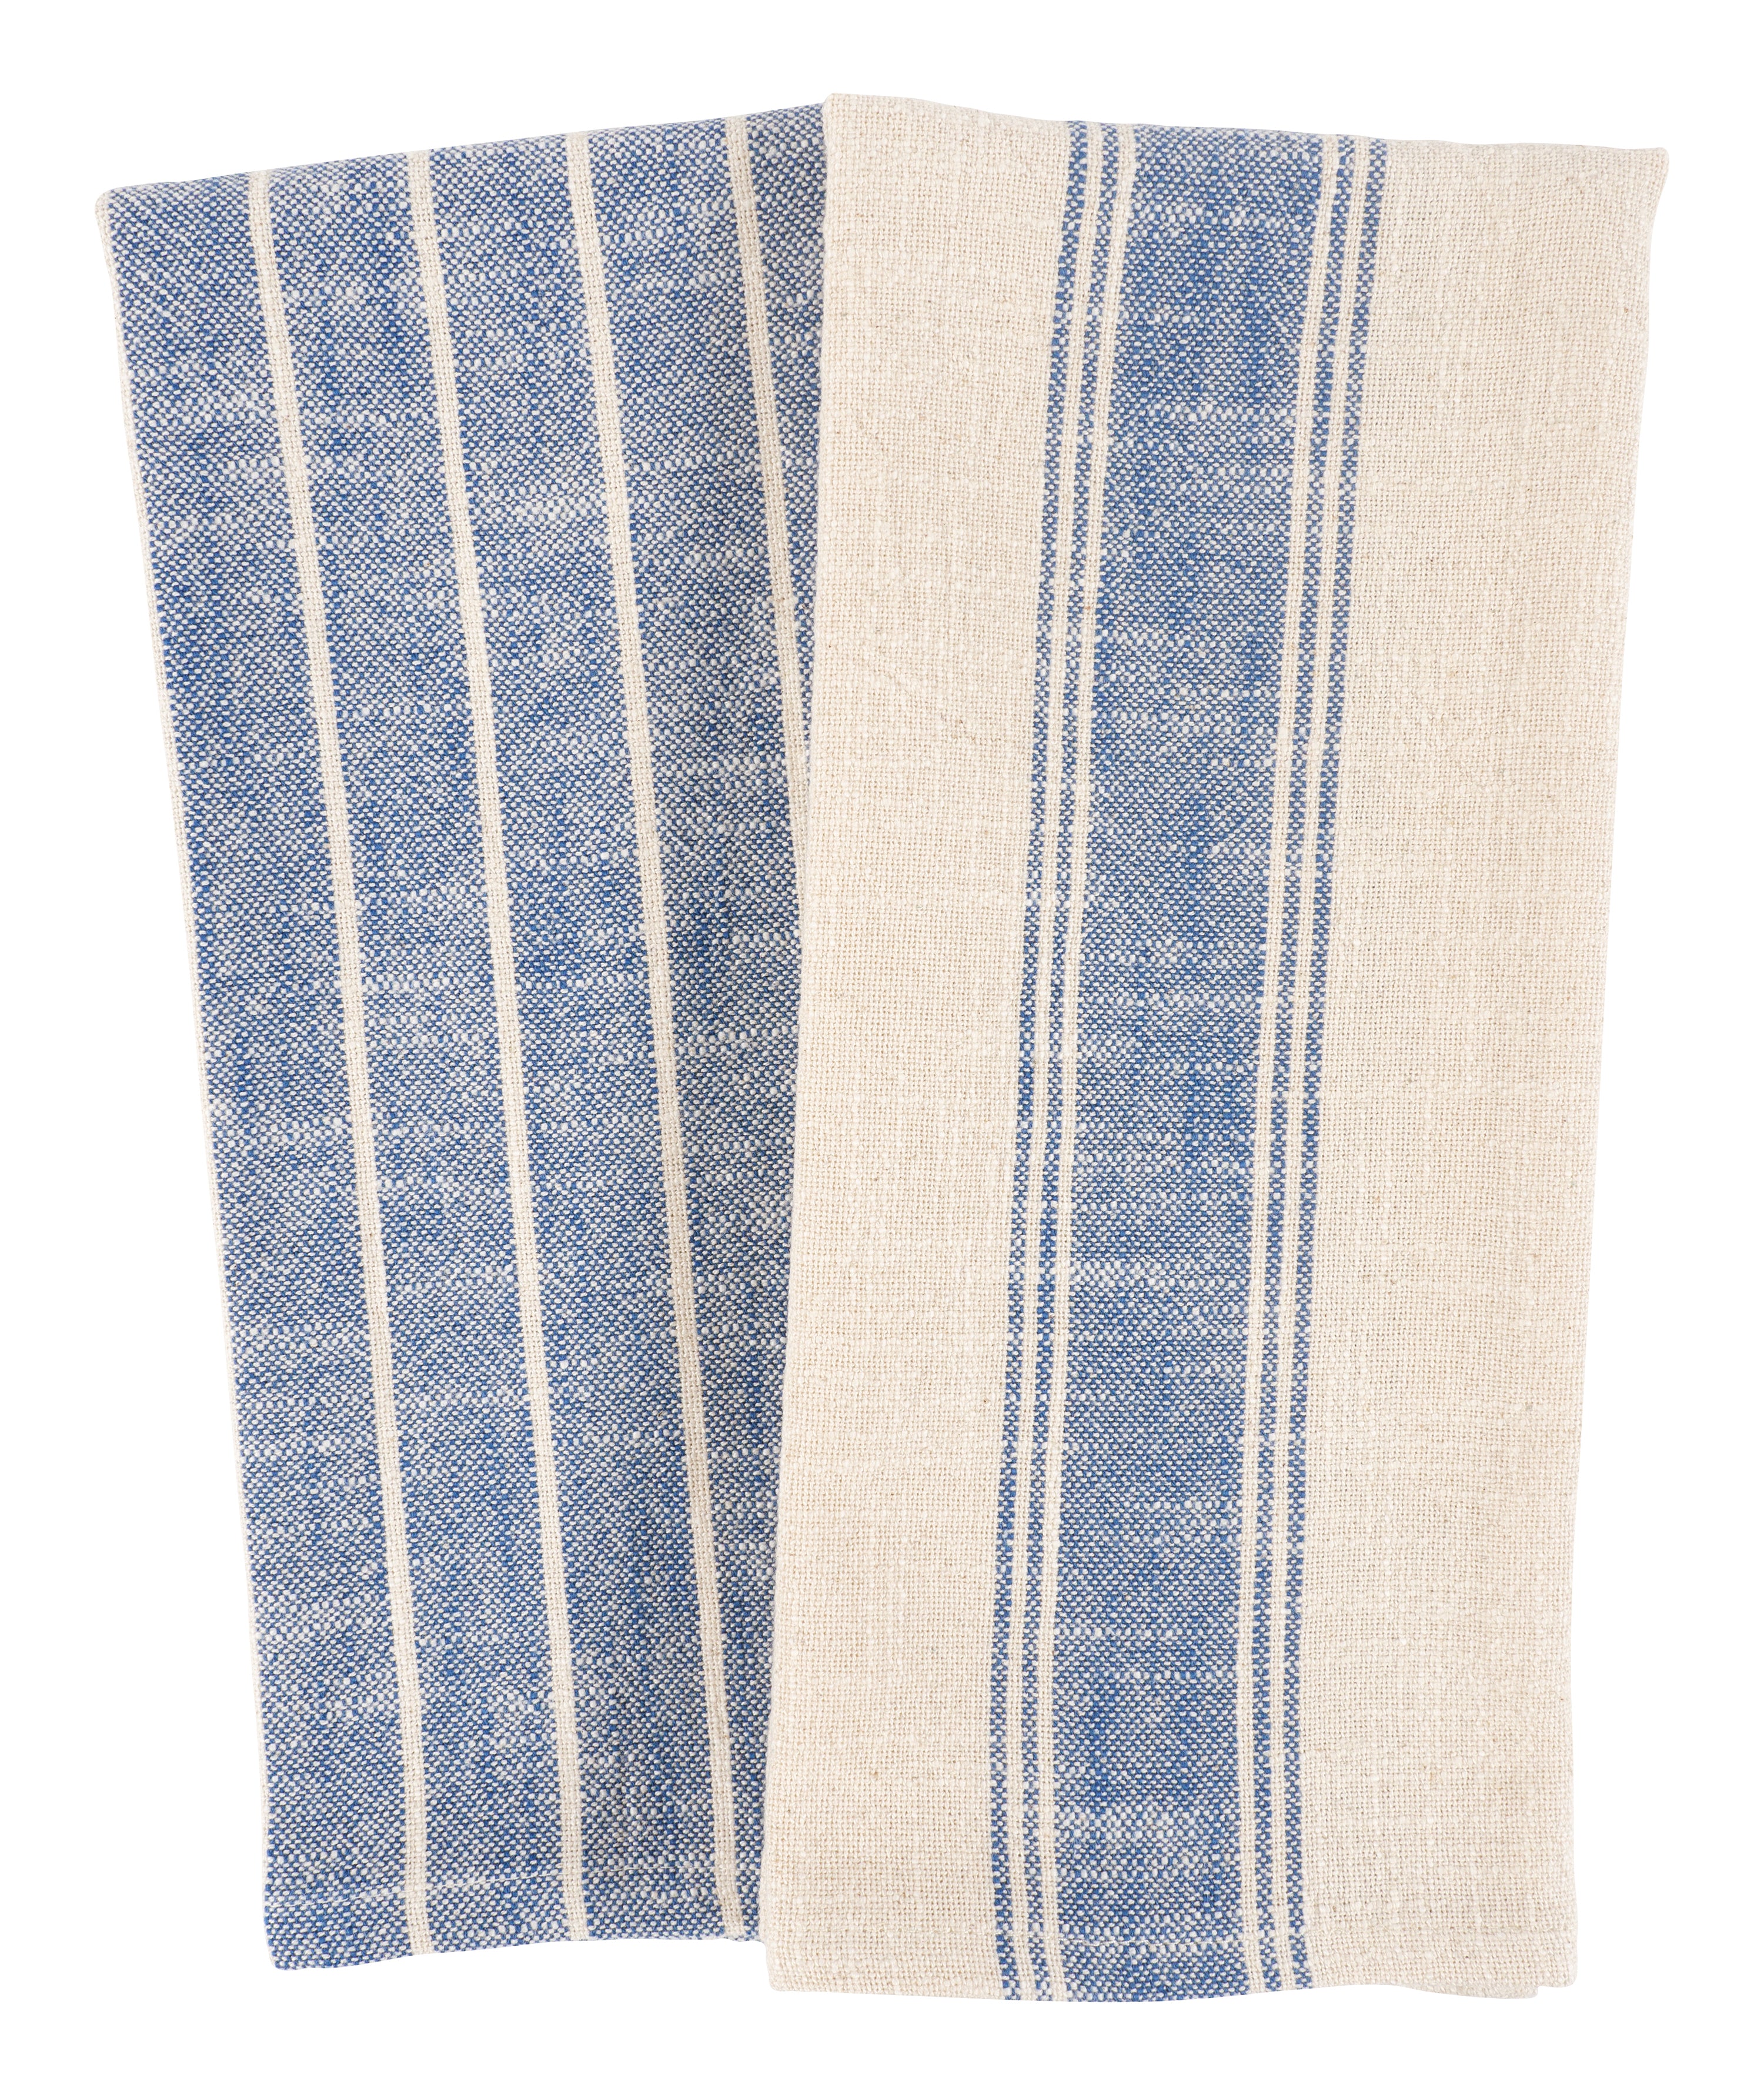 AUTUMN SKIES KITCHEN TOWELS (4) WHITE RUST BLUE KHAKI LEAVES 100% COTTON NWT